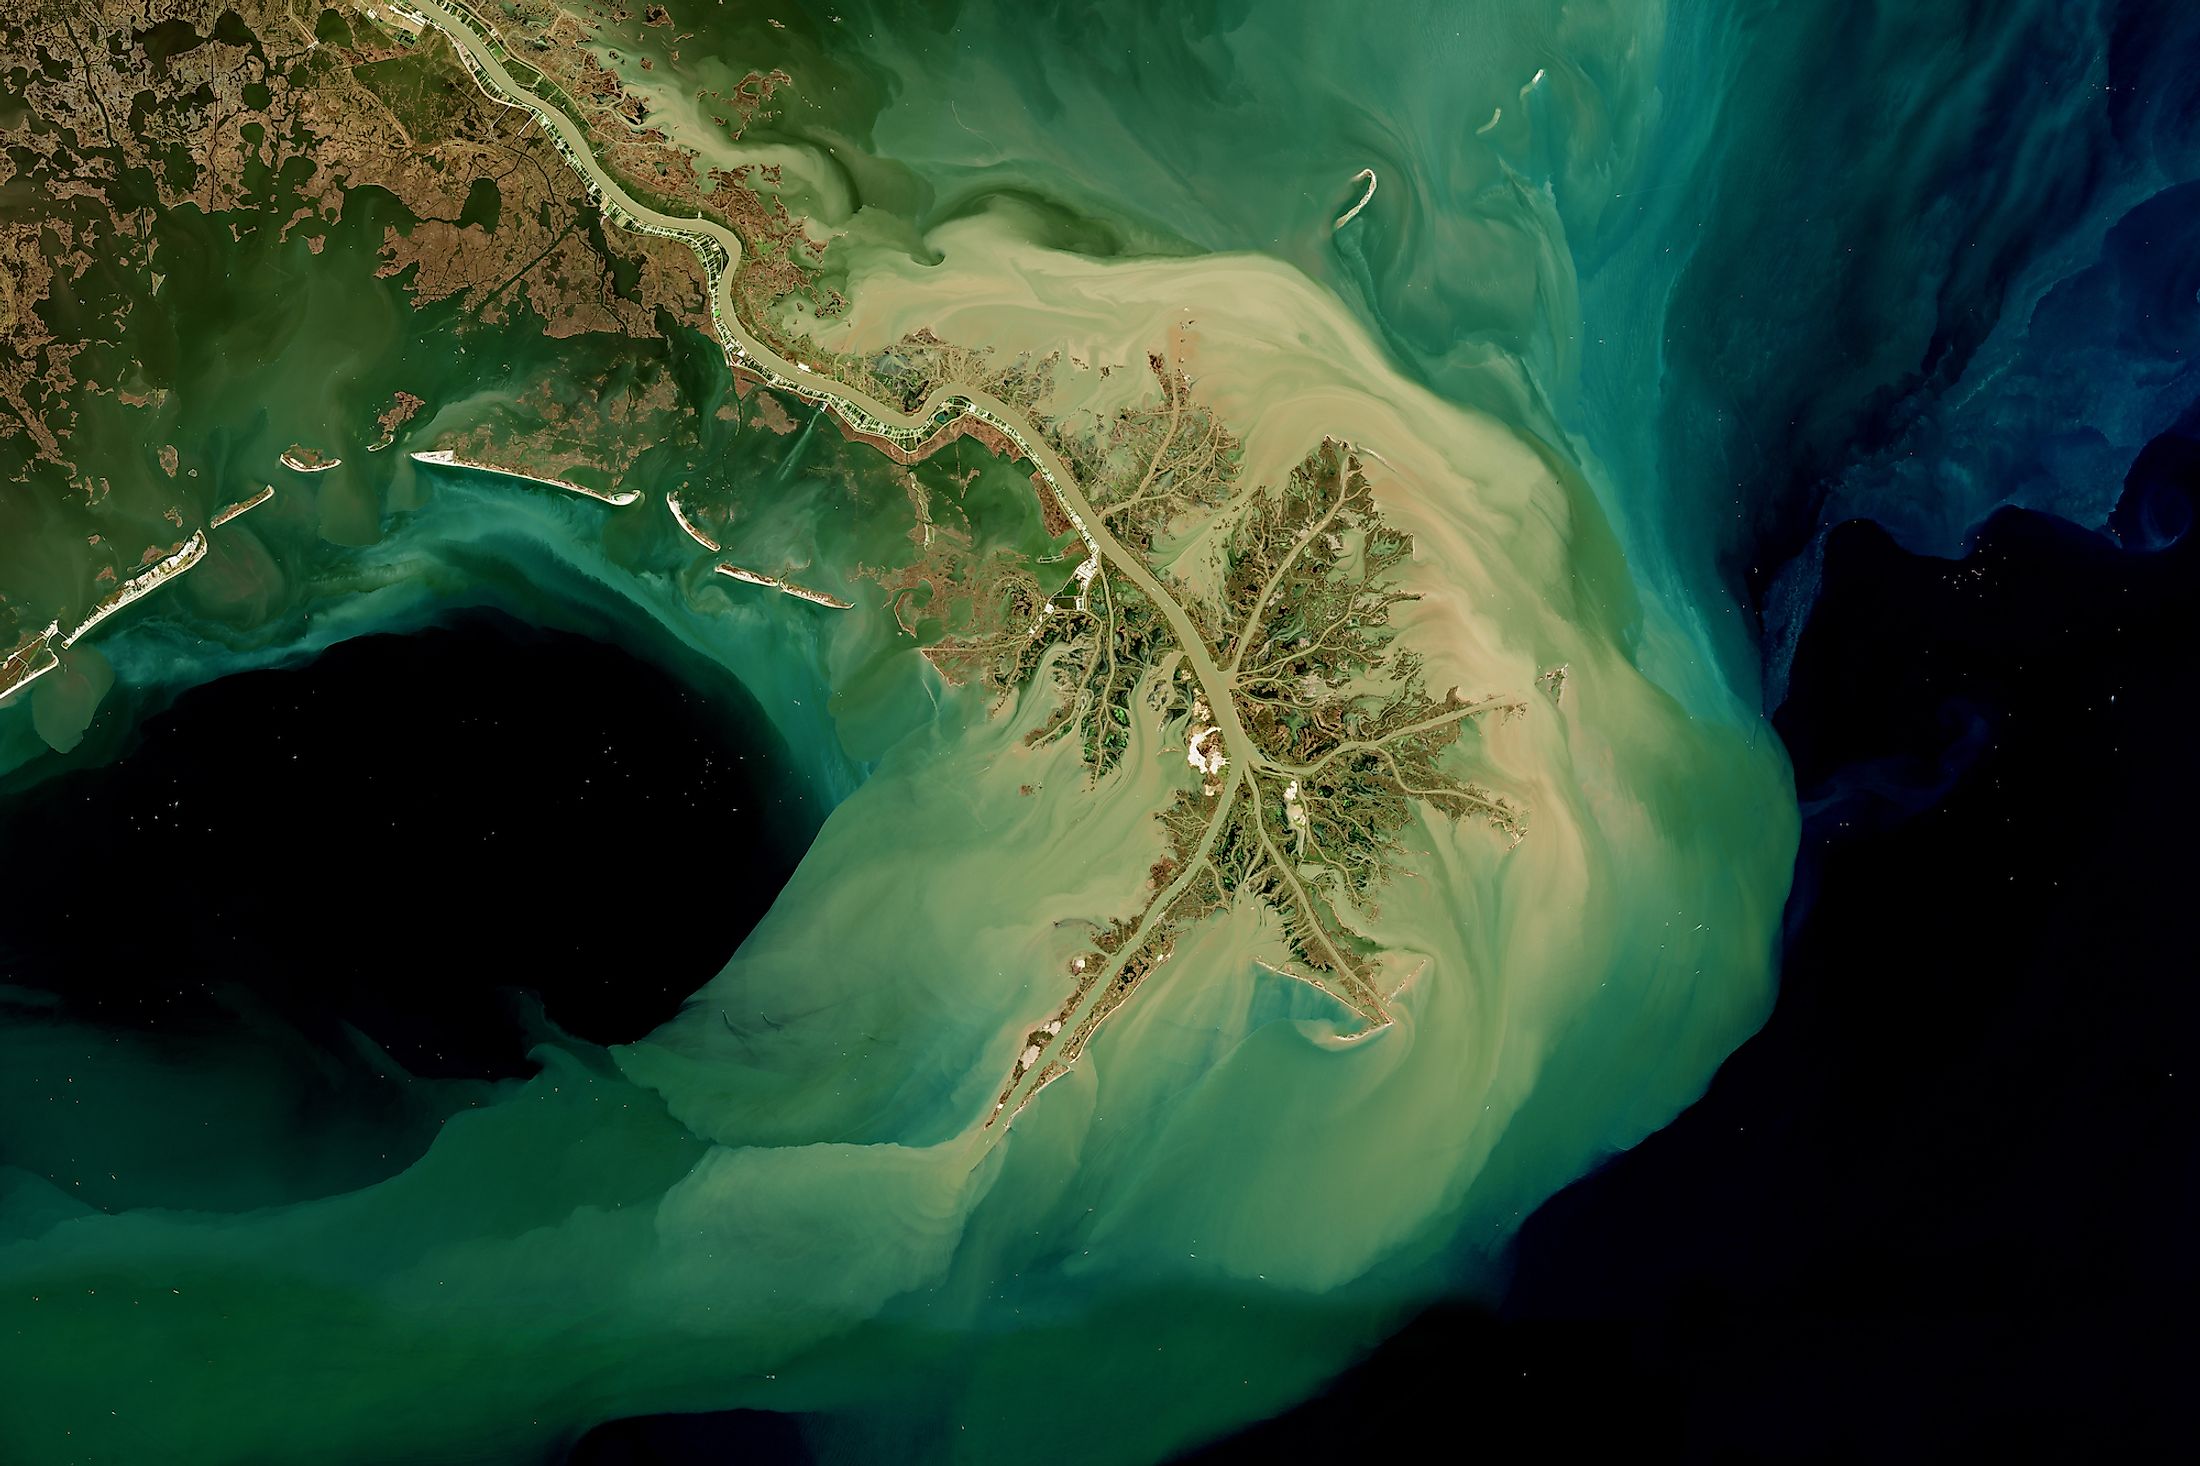 Mississippi River in Louisiana seen from space. Editorial credit: lavizzara / Shutterstock.com